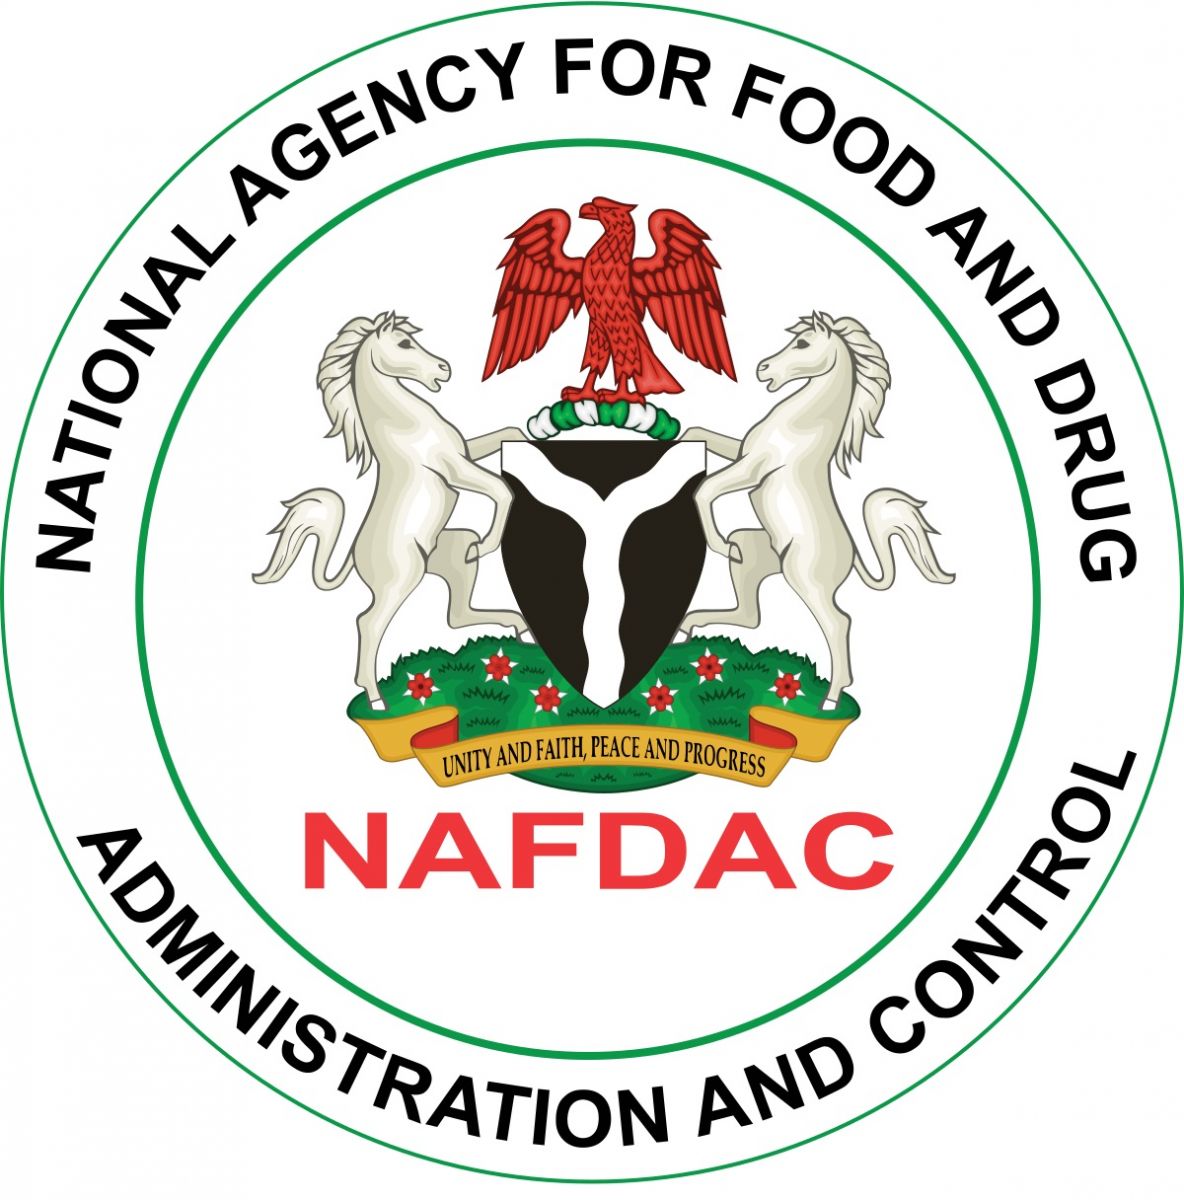 NAFDAC Nigeria logo